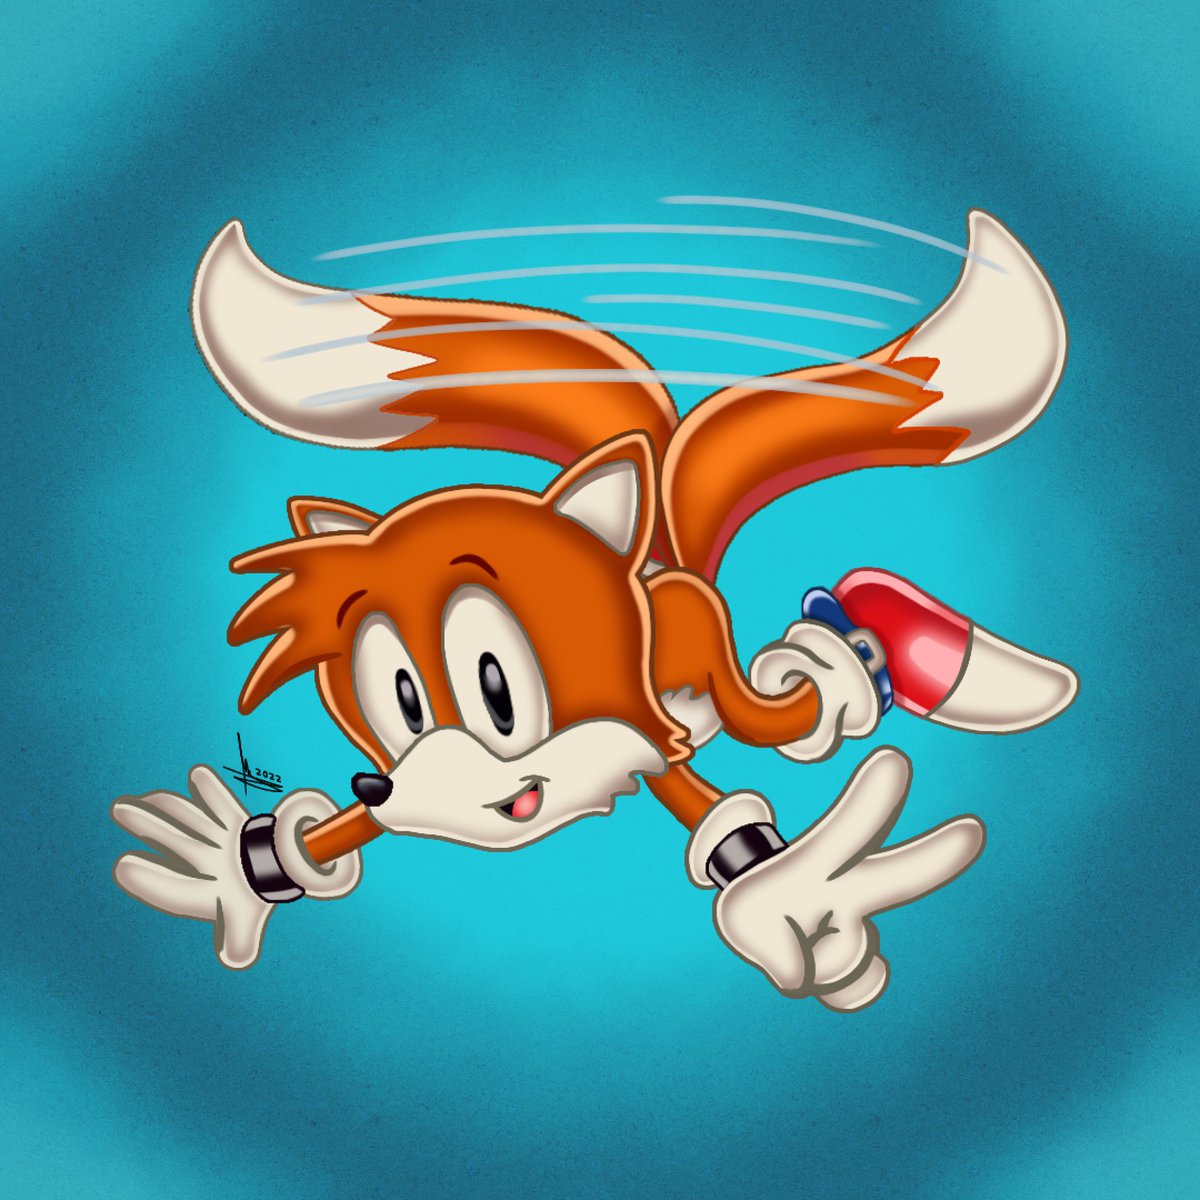 Tails the fox drawn in Greg Martin art style, by me :) 

#sonicthehedgehog #sonicfanart #classicsonic #gregmartin #gregmartinsonic #americansonic #tailsthefox #art #digitalart #fanart #sonic2